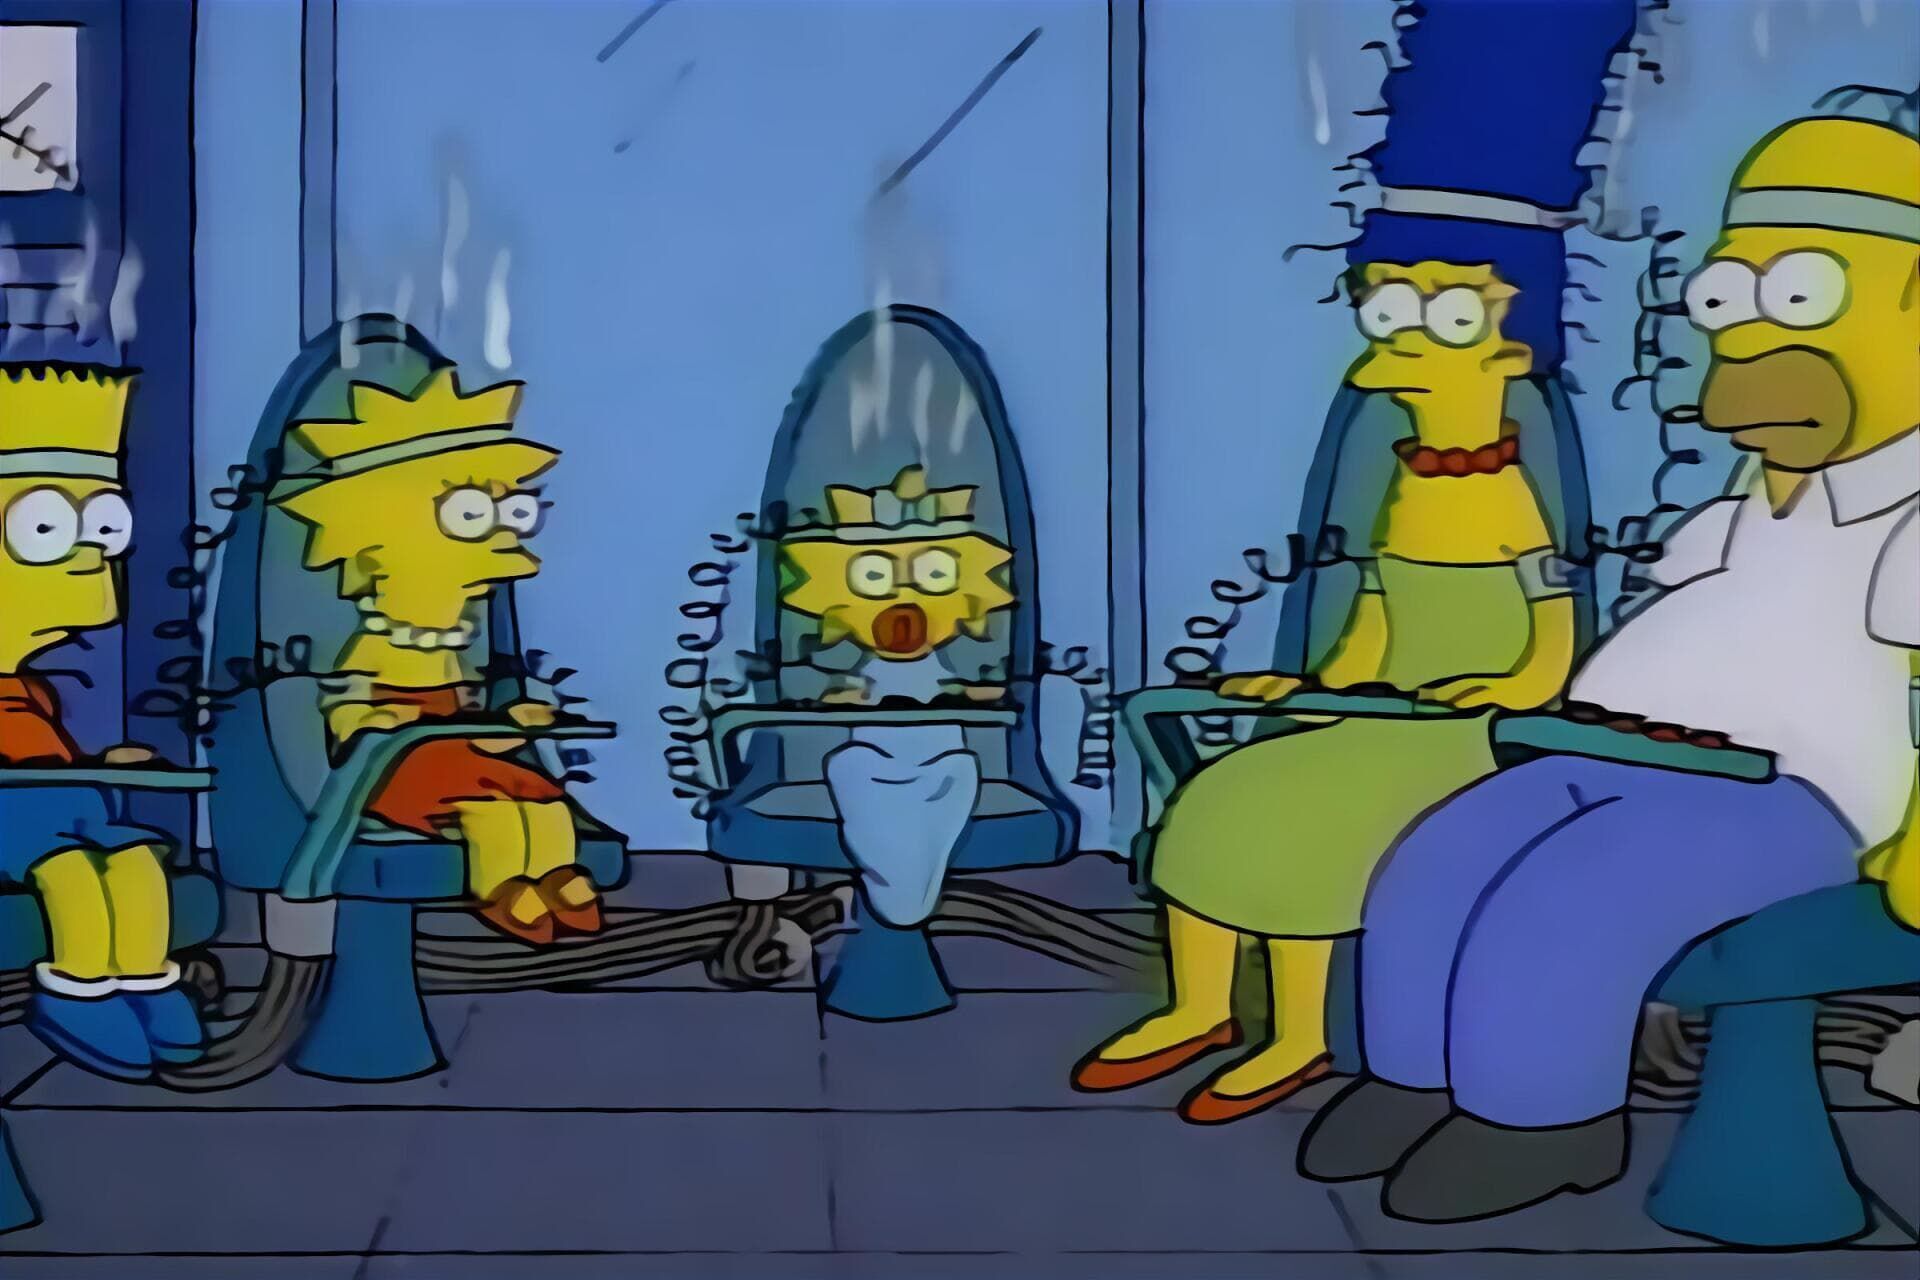 The Simpsons Seizoen 1 Aflevering 4